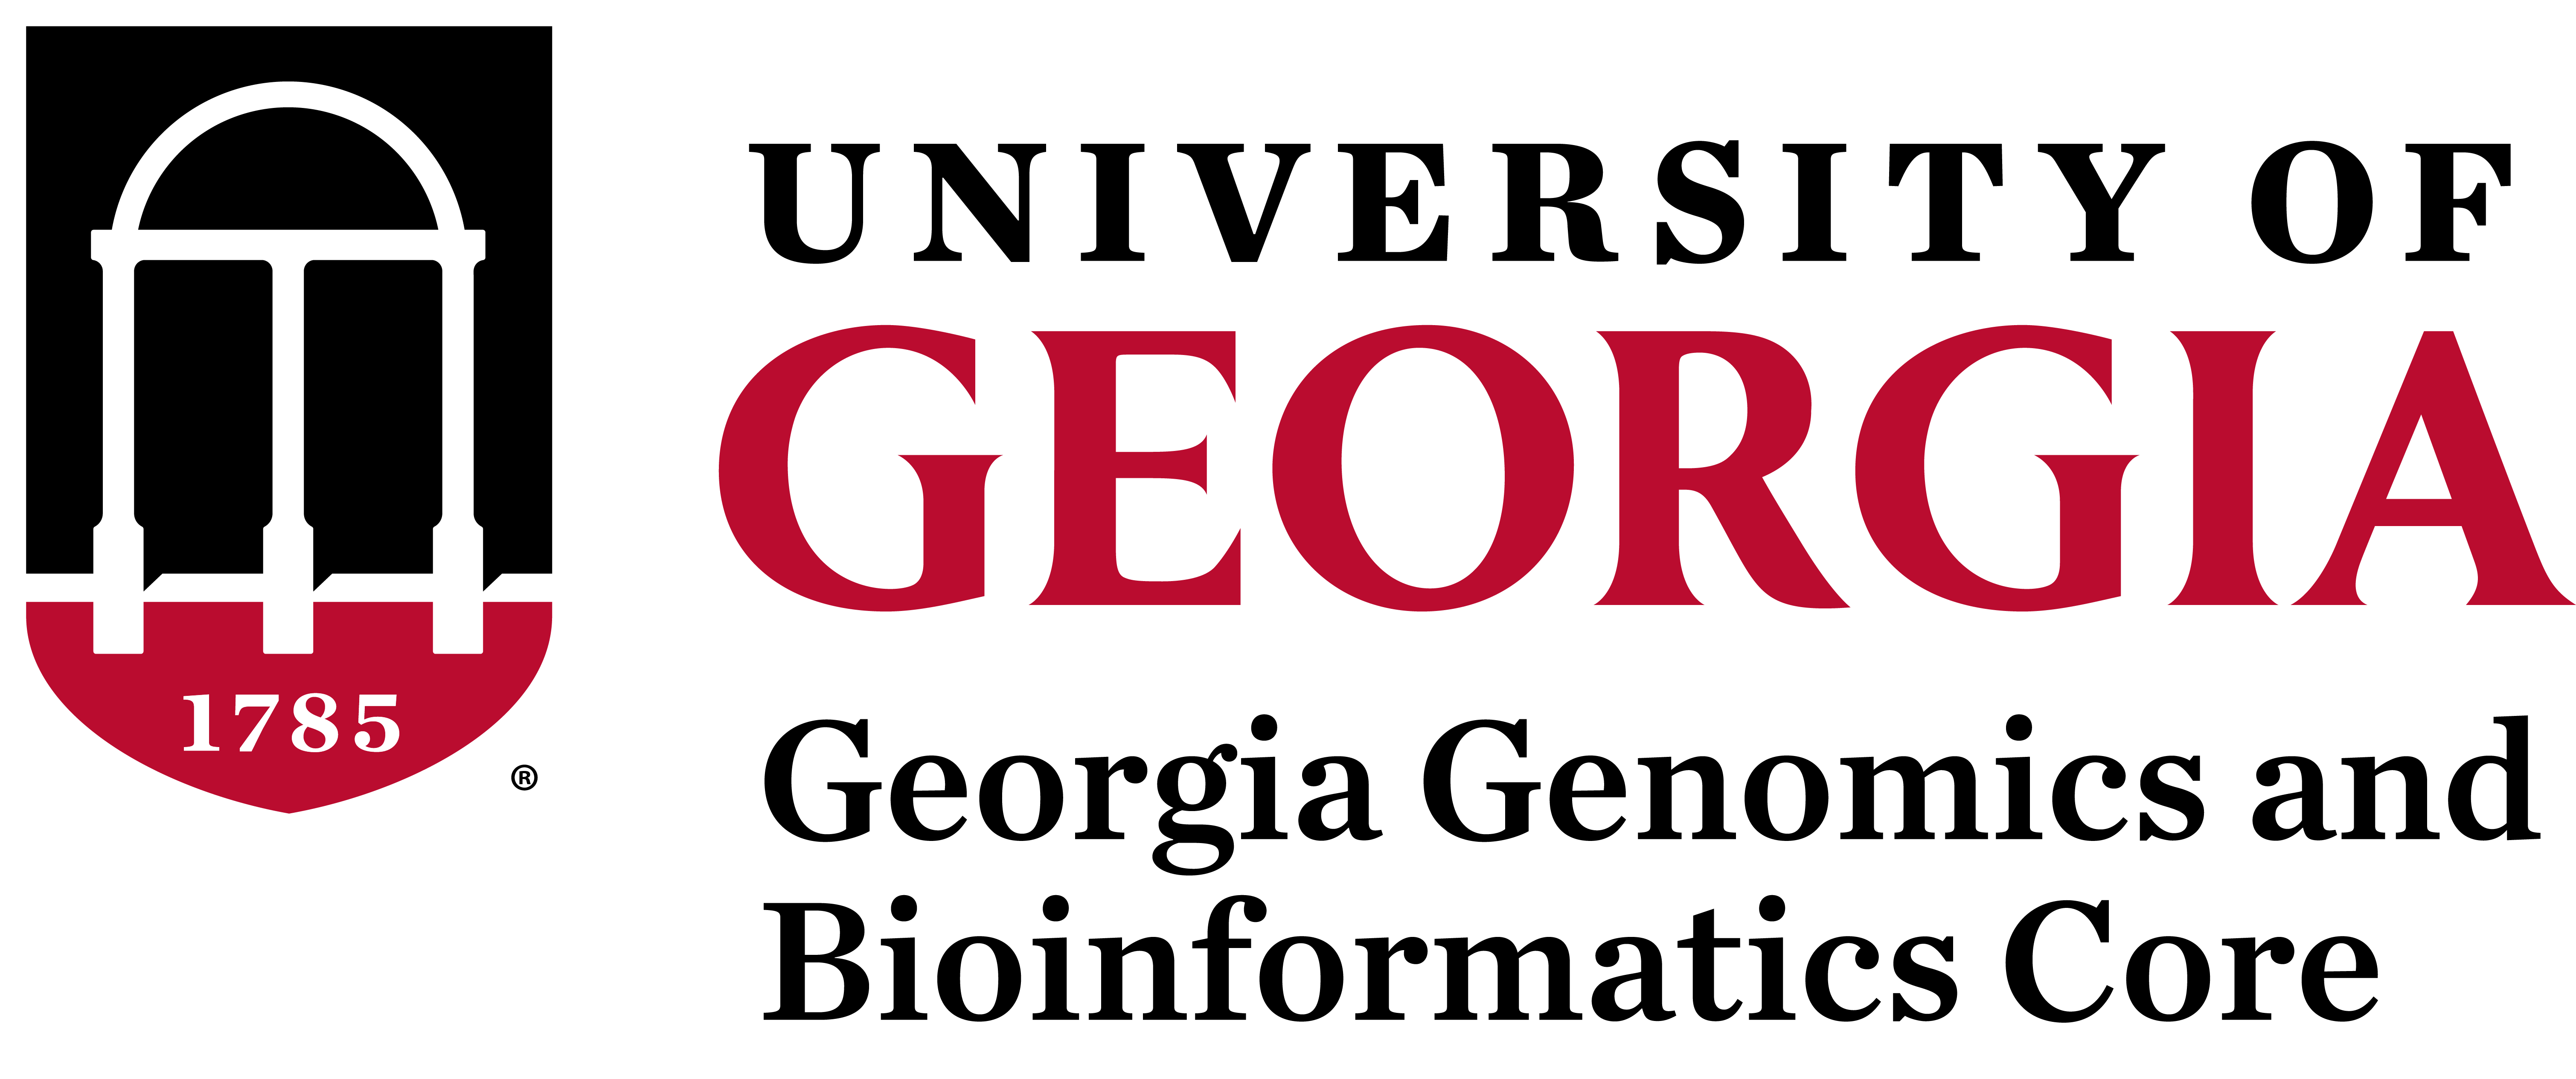 UGA Georgia Genomics and Bioinformatics Core Logo